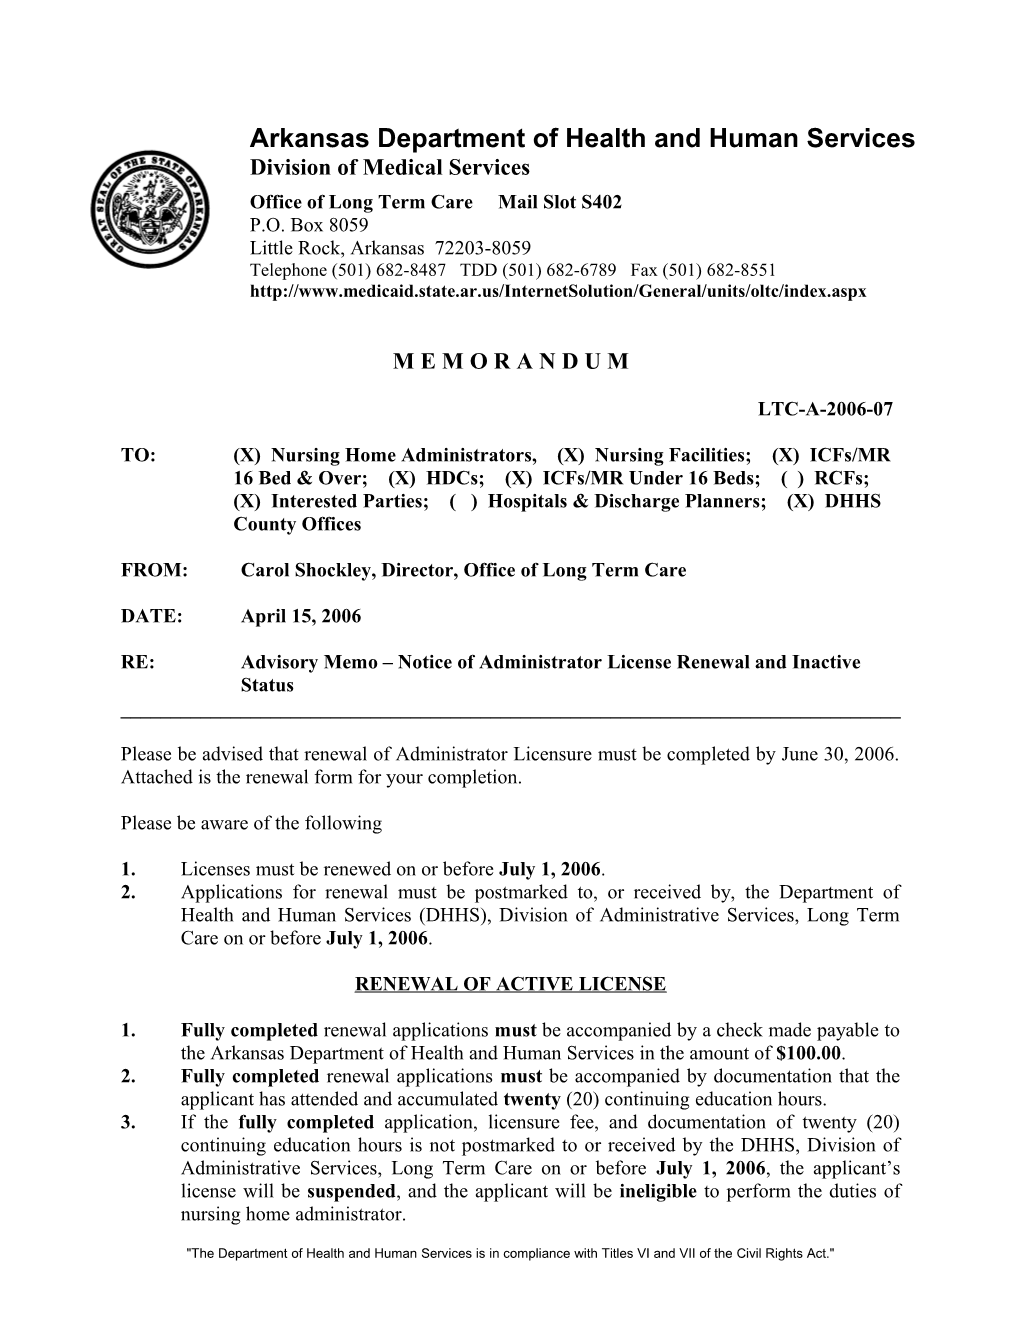 Nursing Home Administrator Licensure Renewal Notice